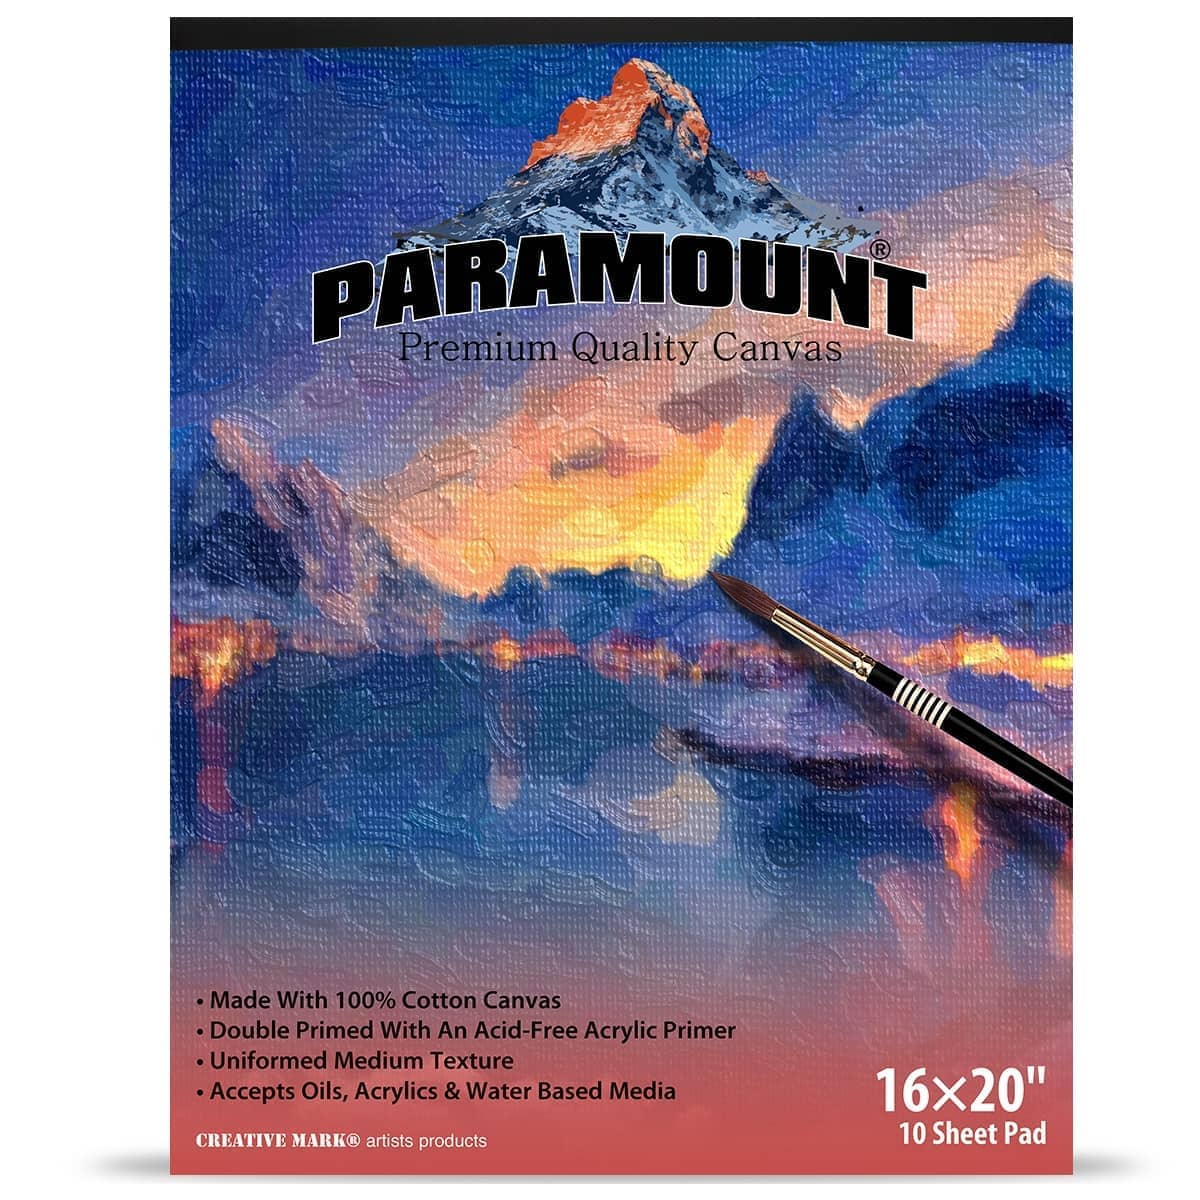 Paramount Canvas Pads